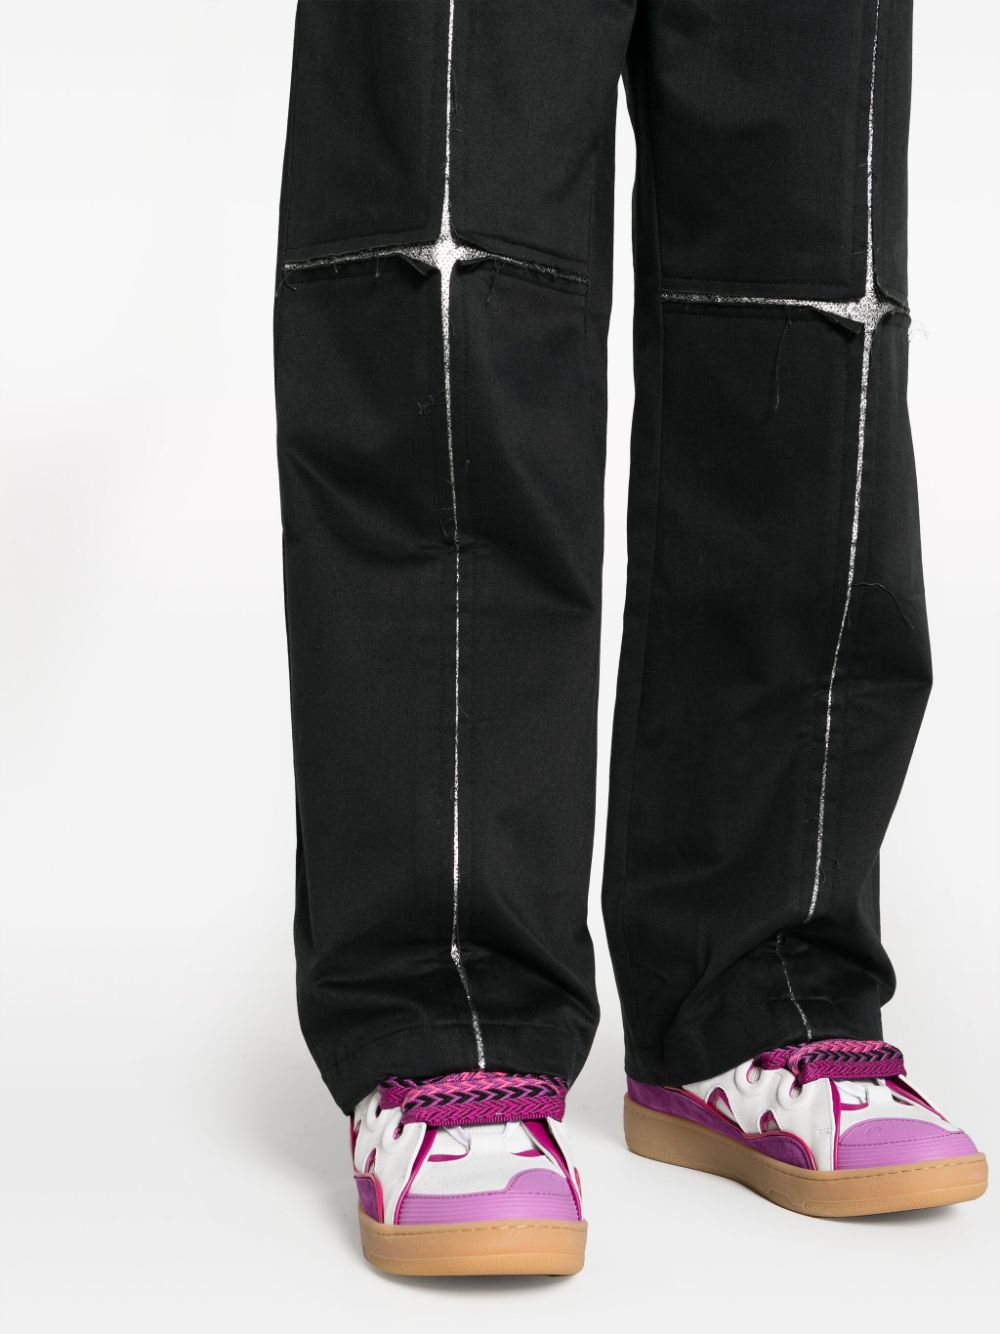 pantalone nero dettagli metallici